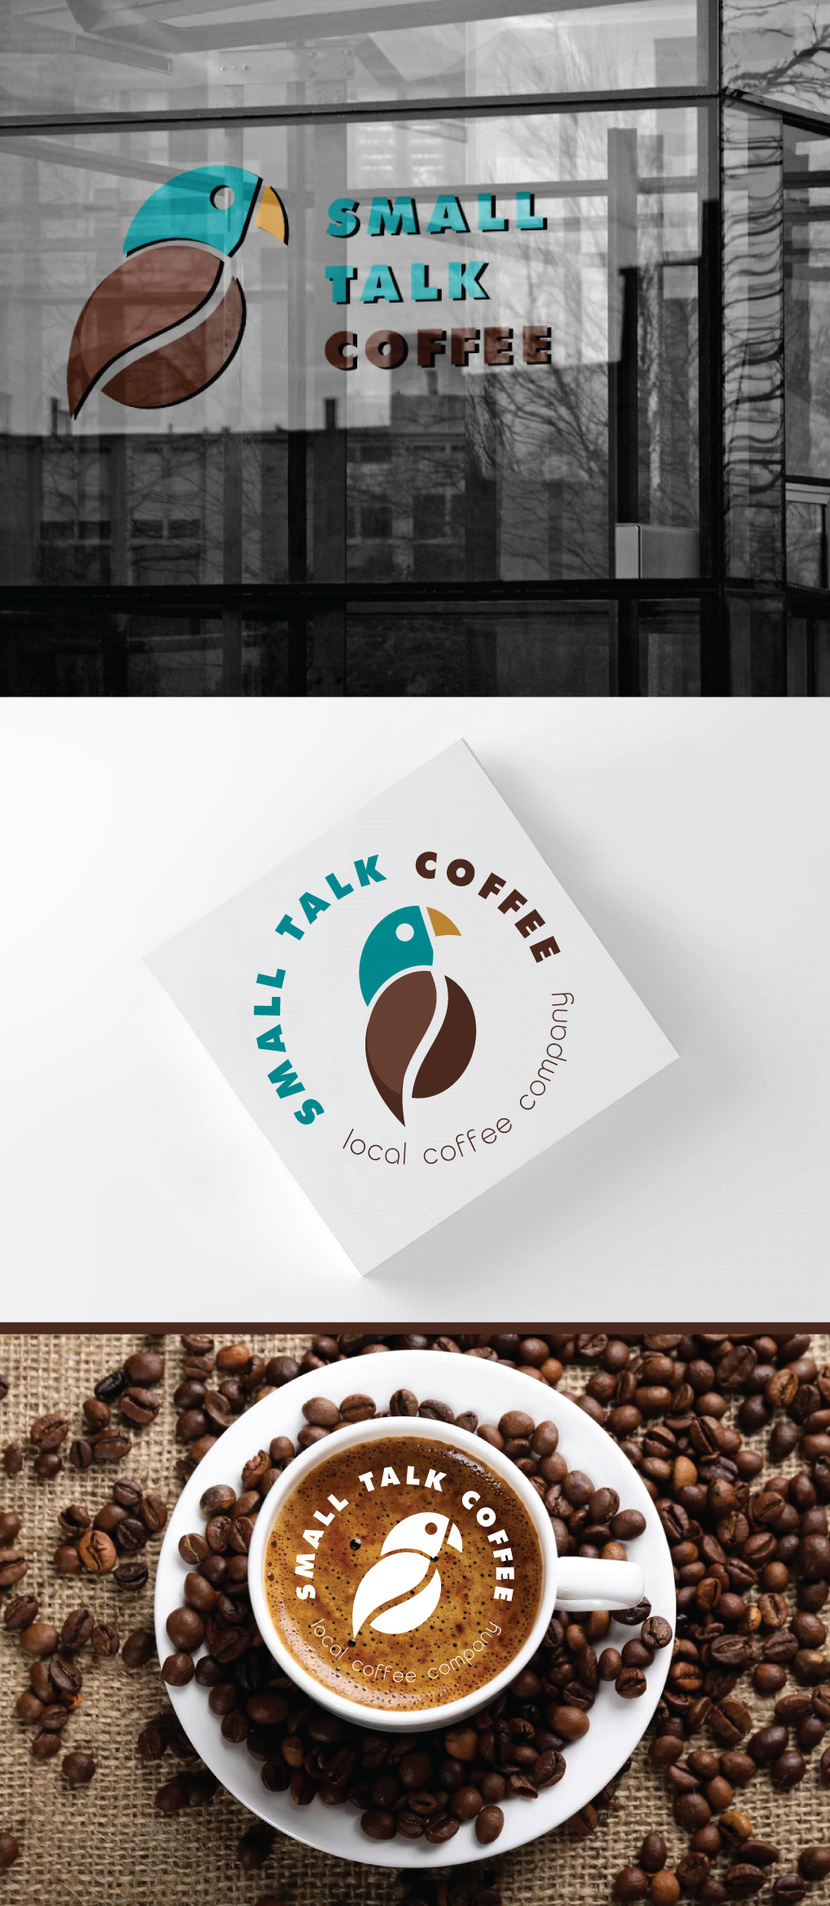 SMALL TALK COFFEE - Лого и фирменный стиль для кофейни